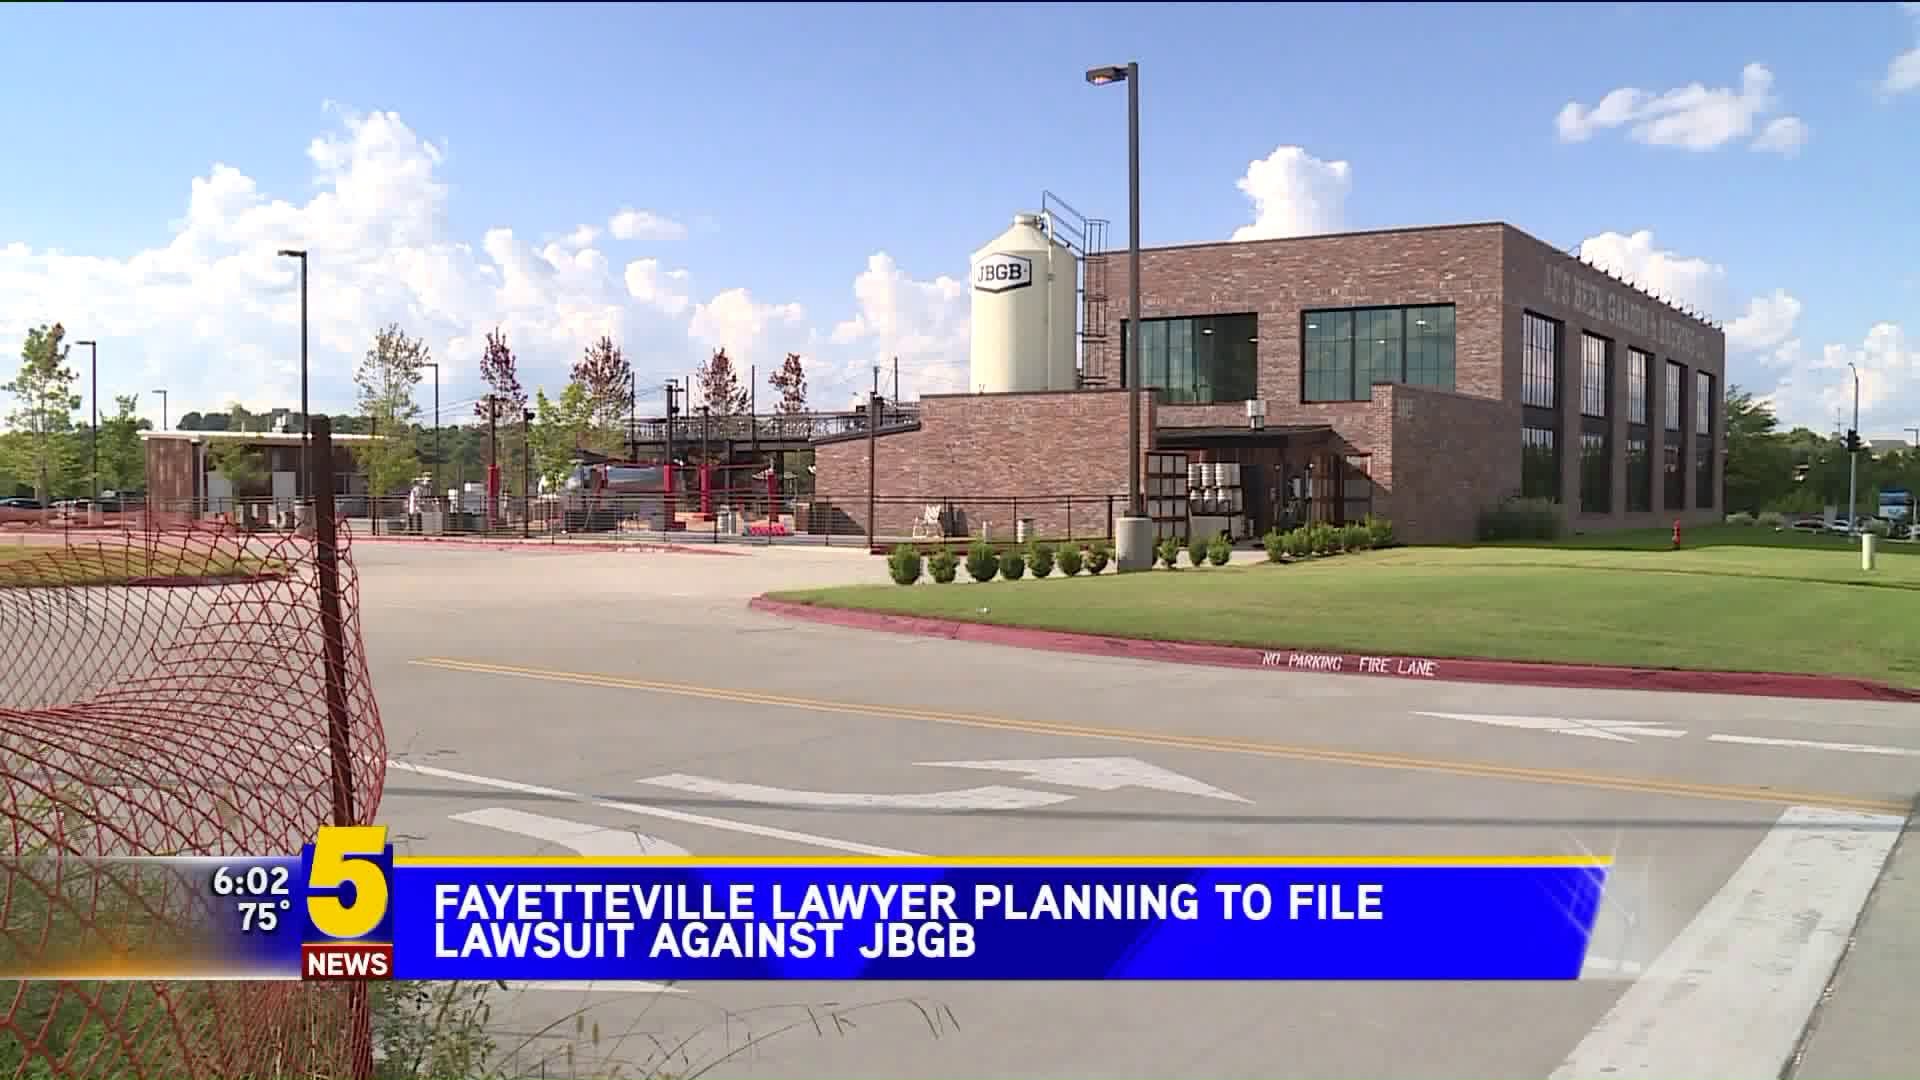 Fayetteville Lawyer Planning To File Lawsuit Against JBGB